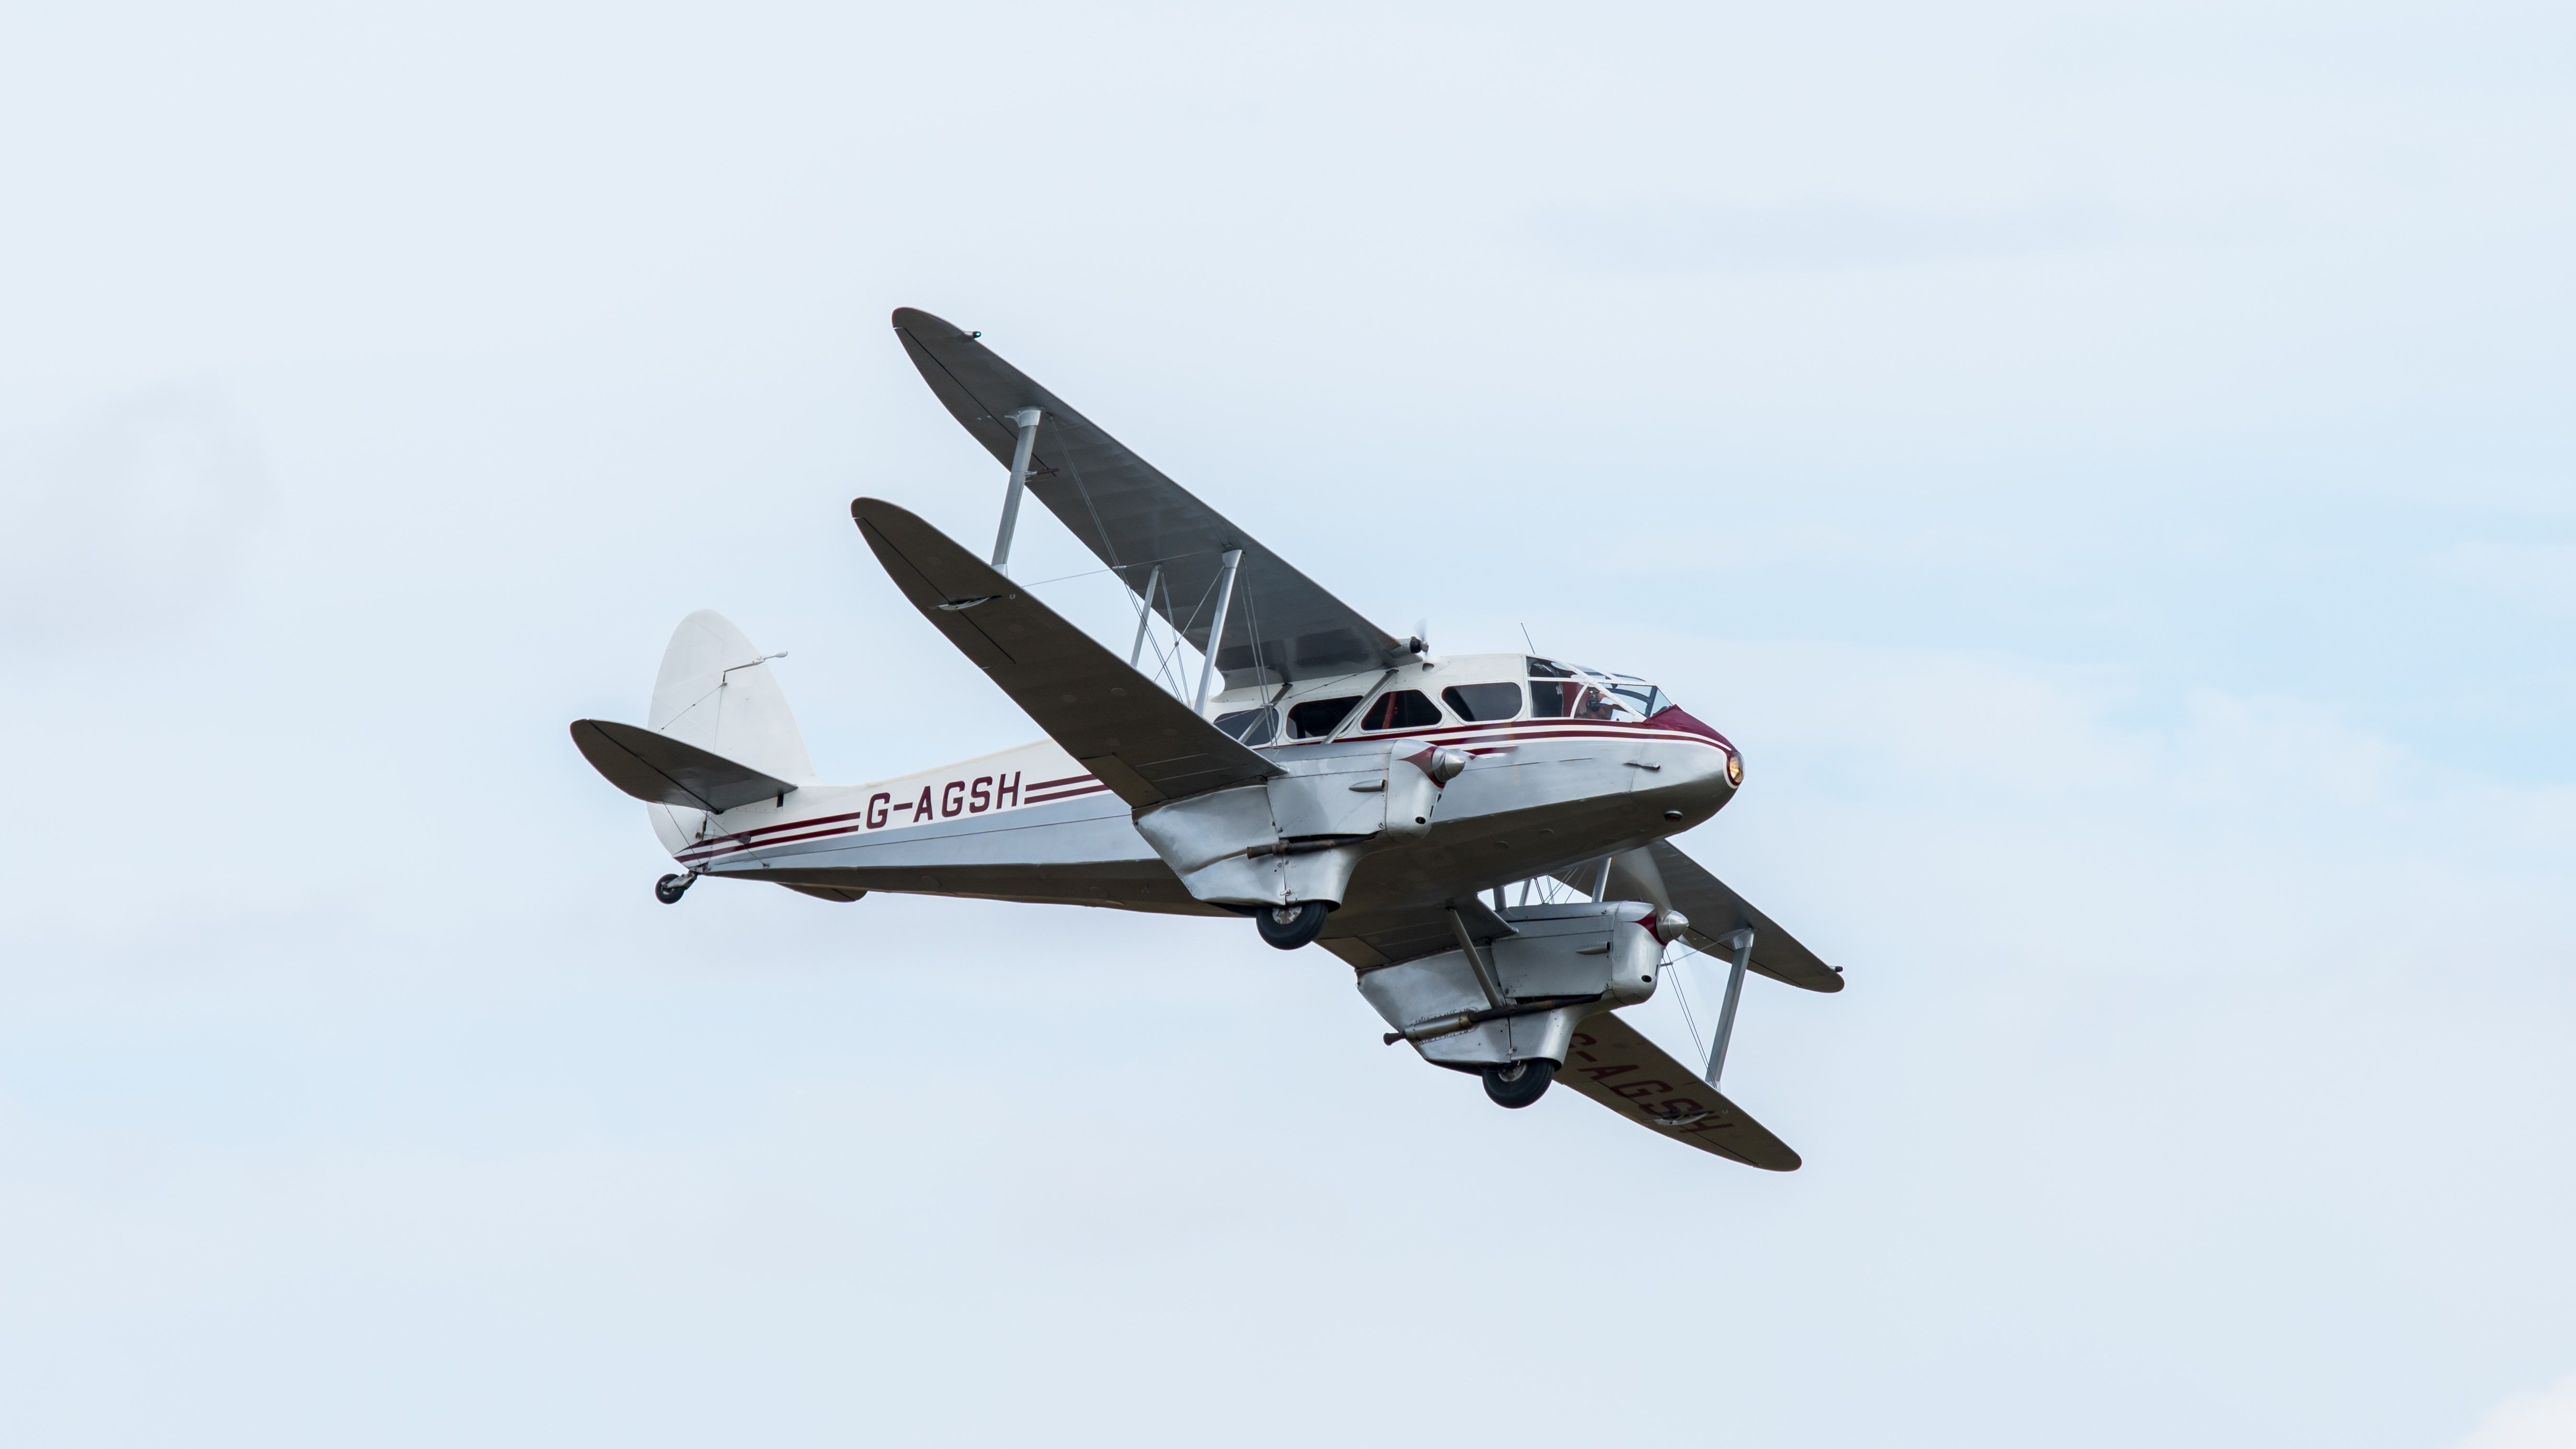 A De Havilland Dragon Rapide Flying in the sky.